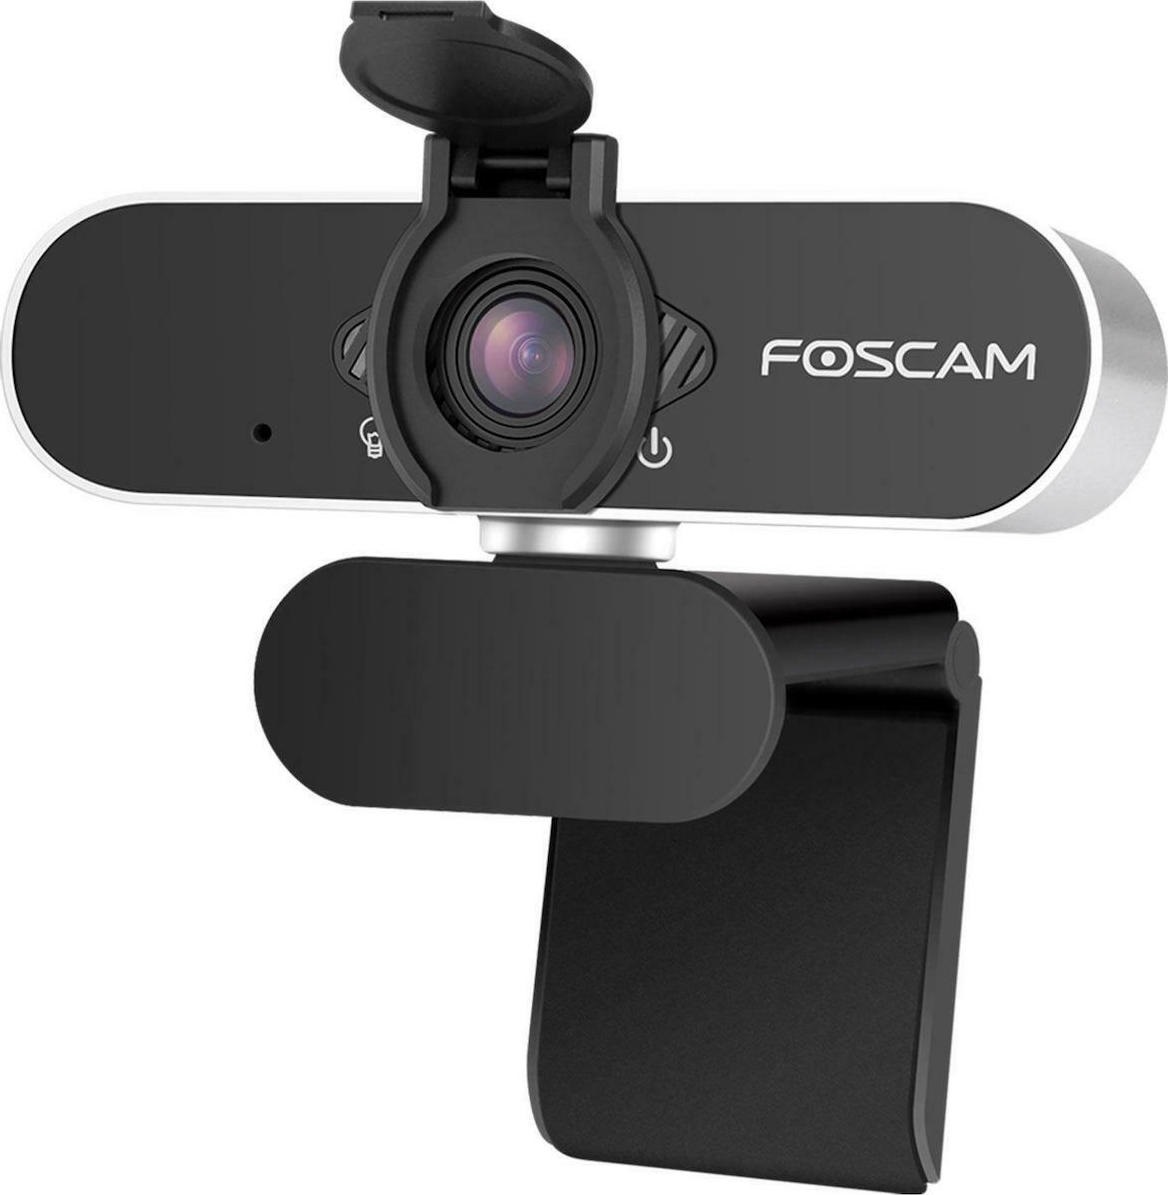 Foscam Webcam W21 Full HD 1920x1080 - 2MP - Auto Focus